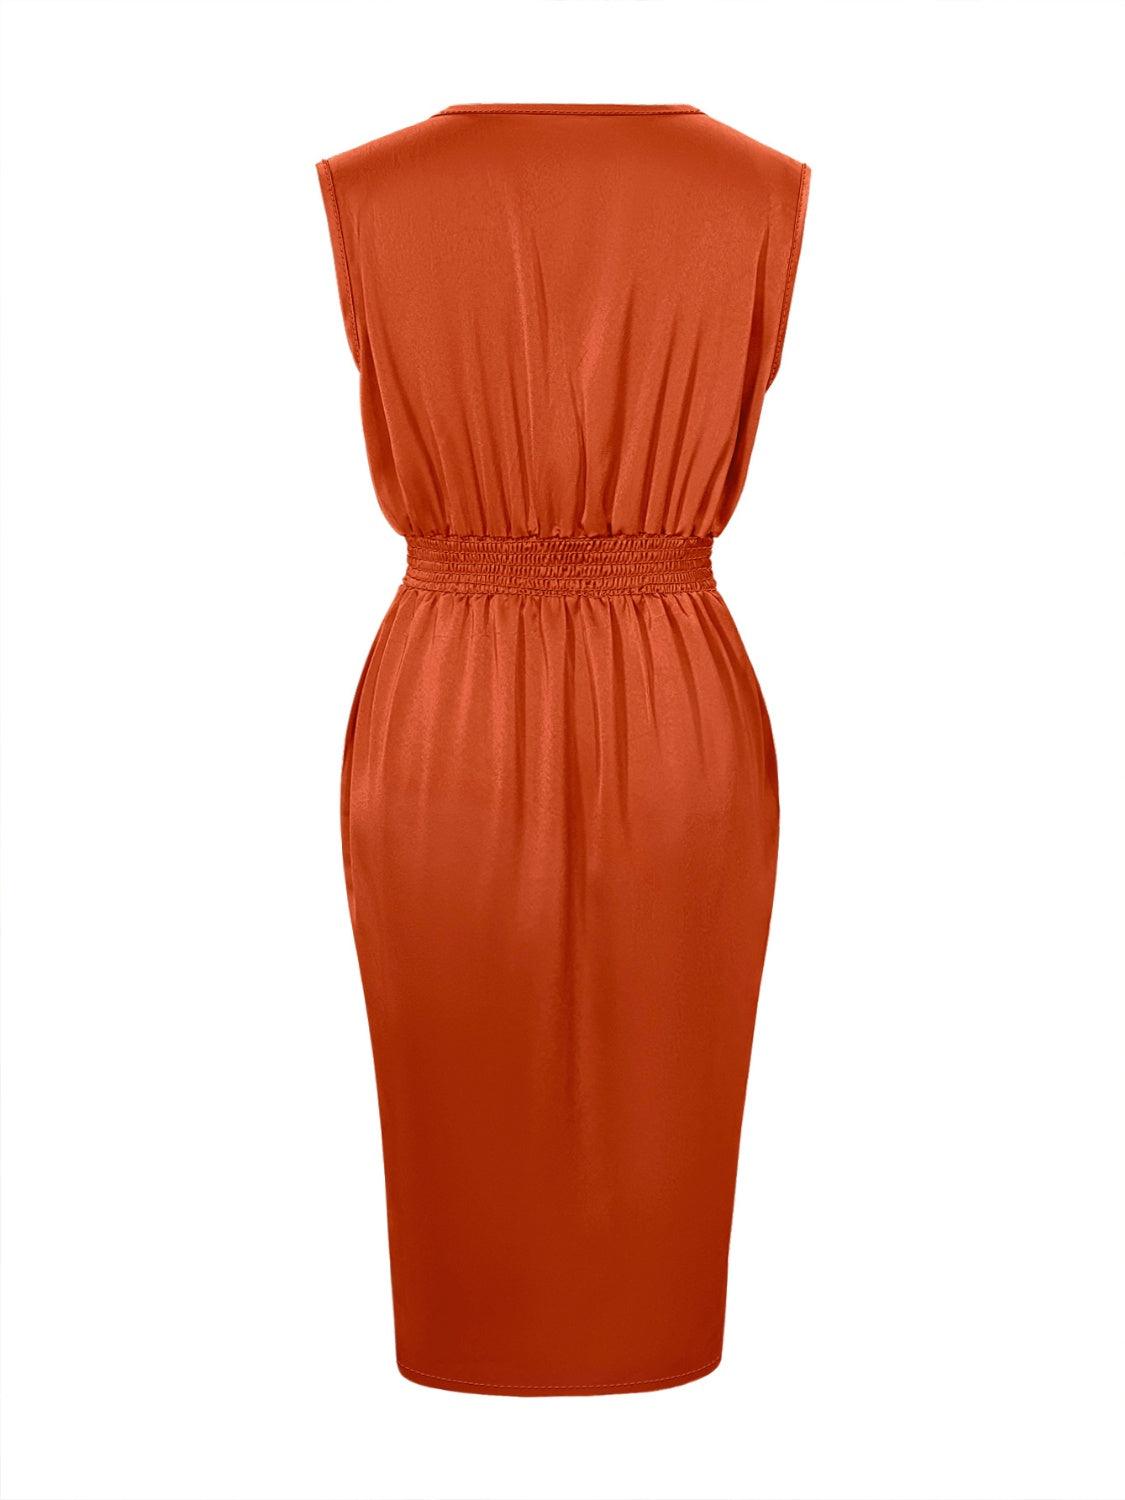 a woman in an orange dress with a belt